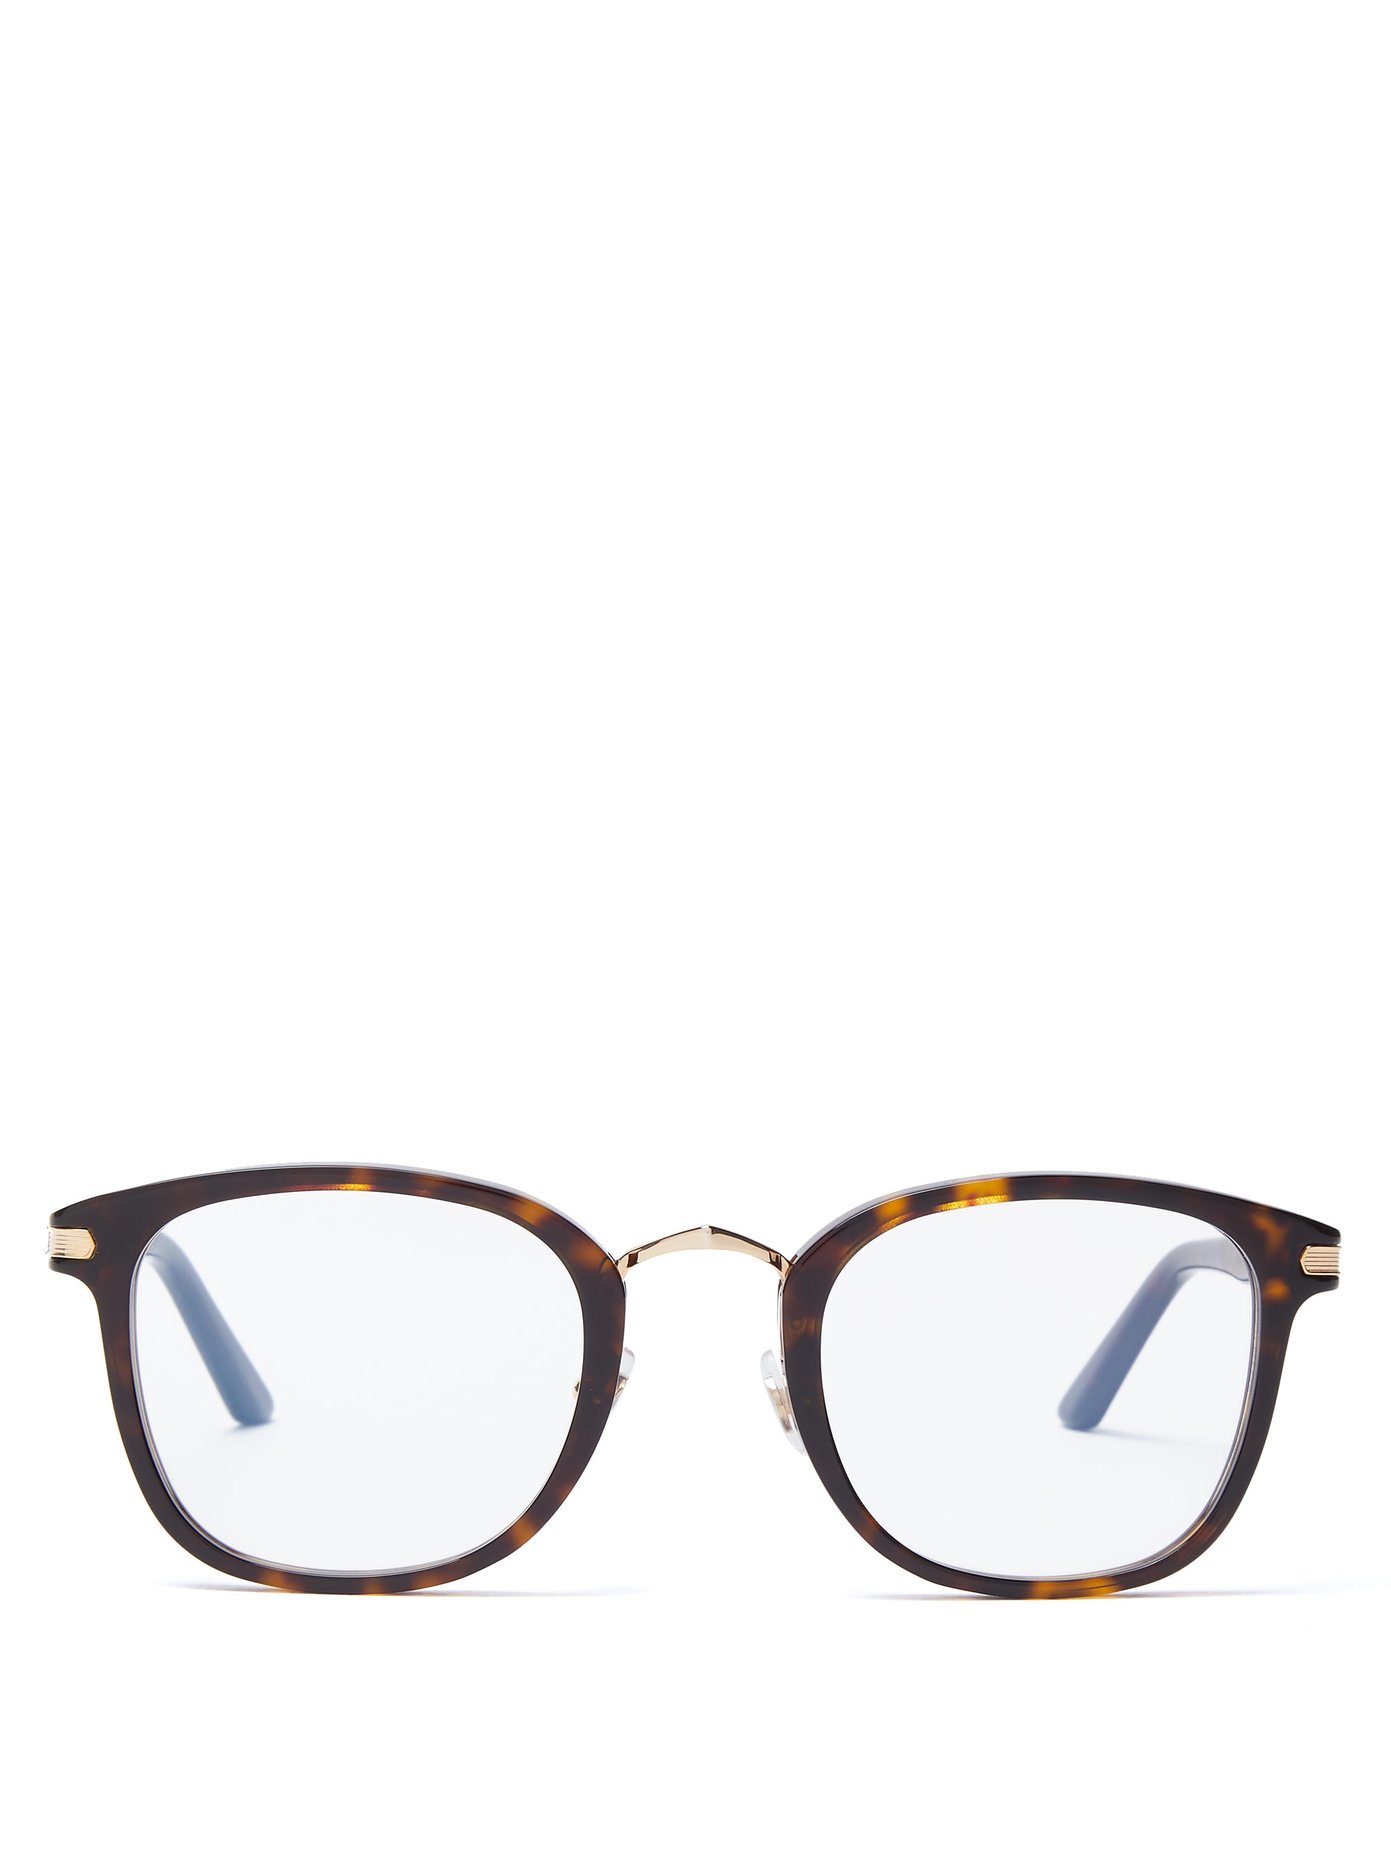 cartier optical glasses uk